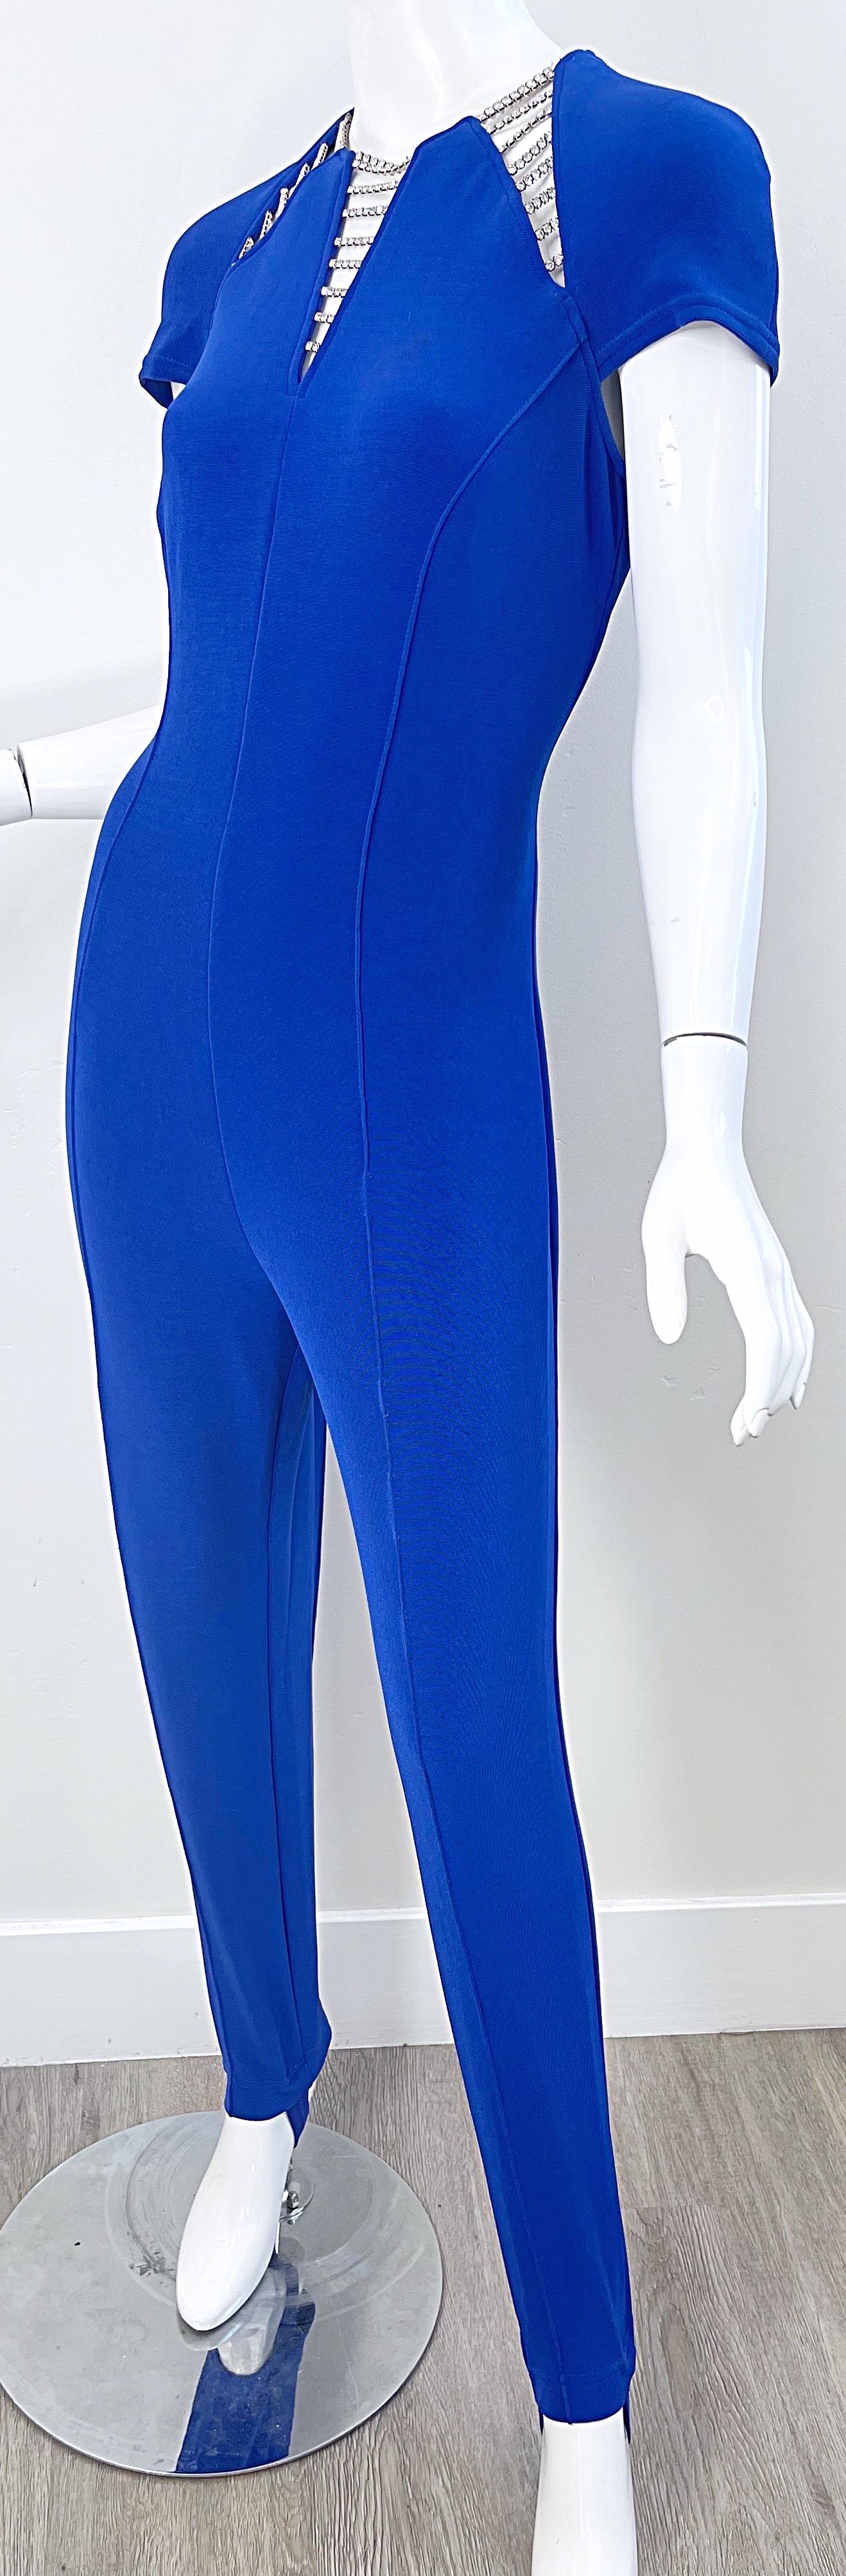 1980s Tadashi Royal Blue Rhinestone Cut Out Stirrup Pant Vintage 80s Jumpsuit For Sale 7